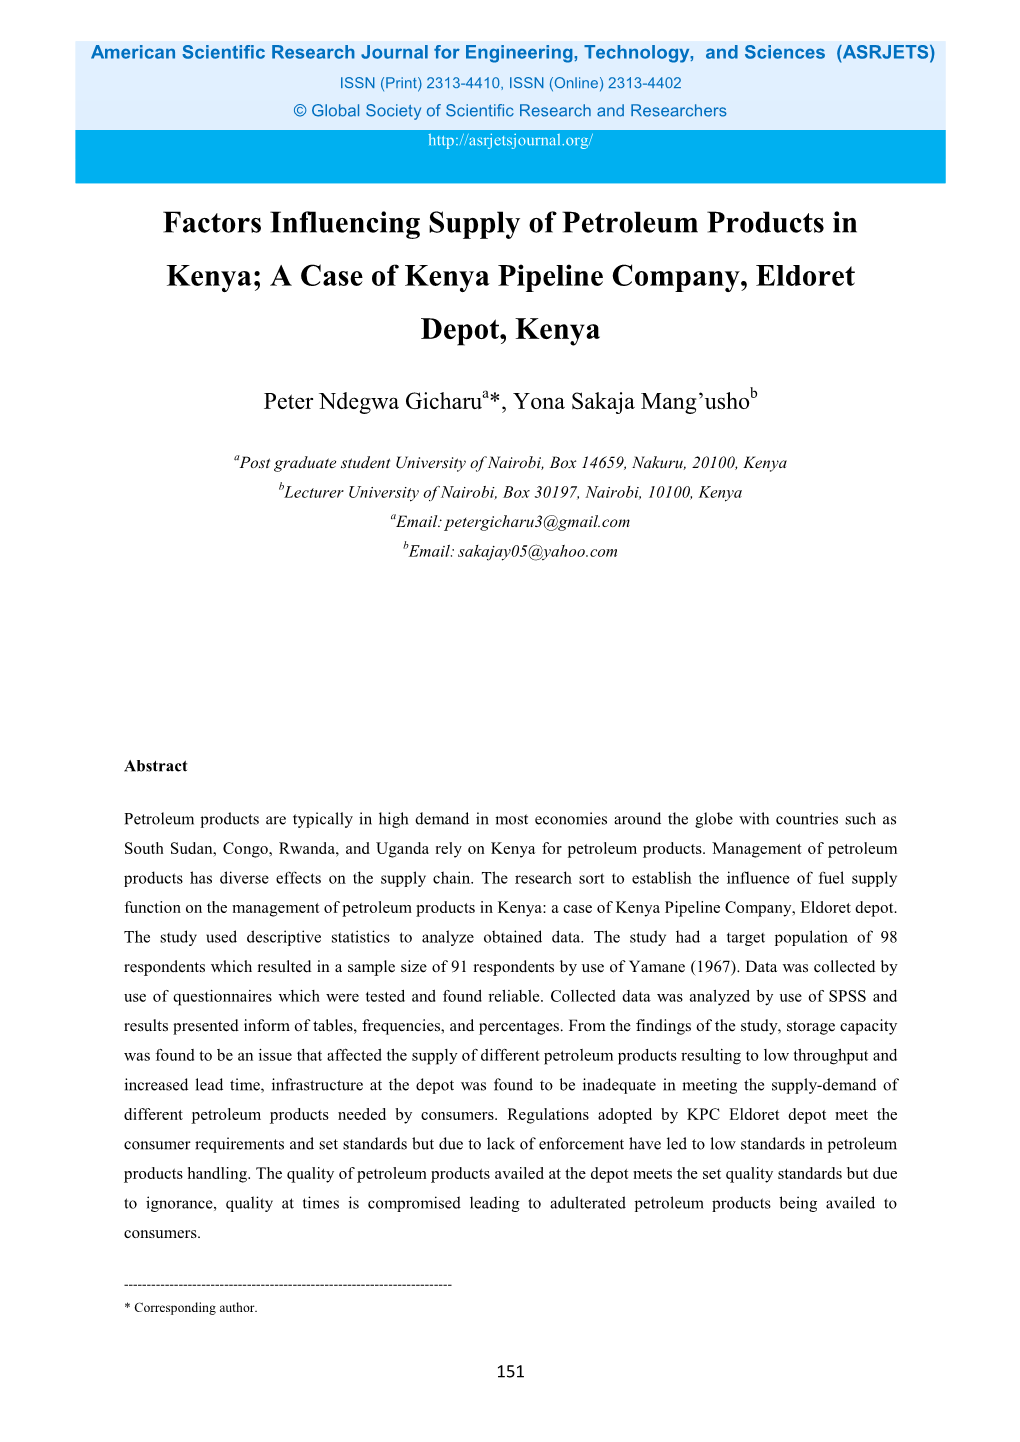 Factors Influencing Supply of Petroleum Products in Kenya; a Case of Kenya Pipeline Company, Eldoret Depot, Kenya